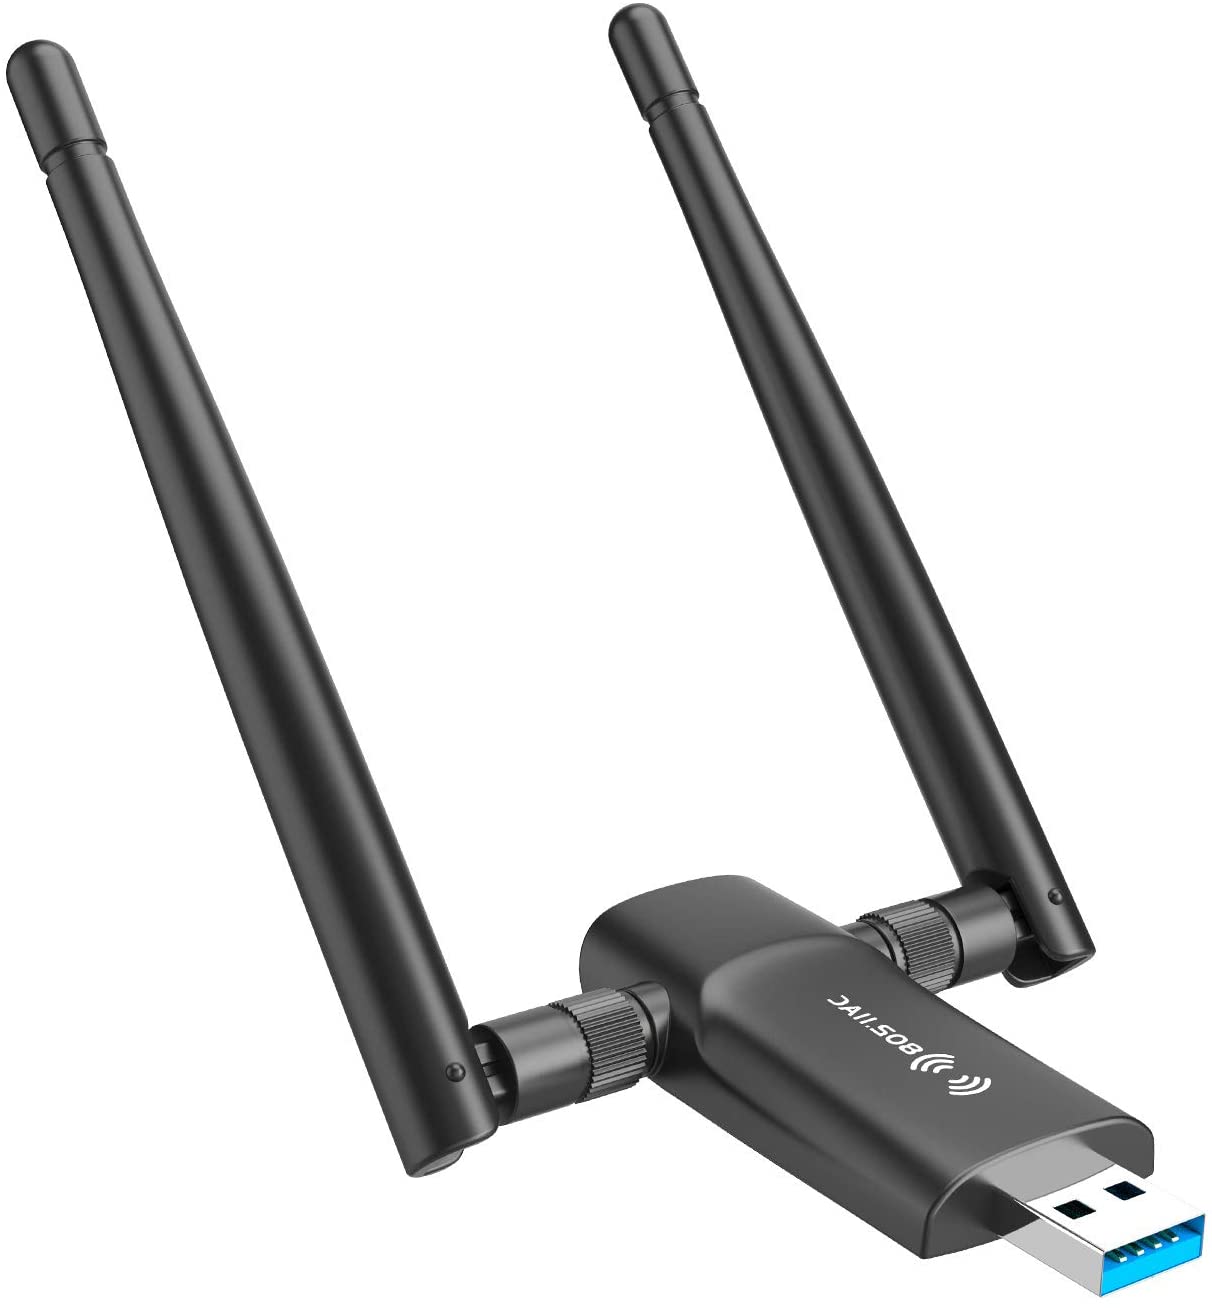 Kerkbank Springplank Zakenman Nineplus Wireless USB WiFi Adapter Antenna